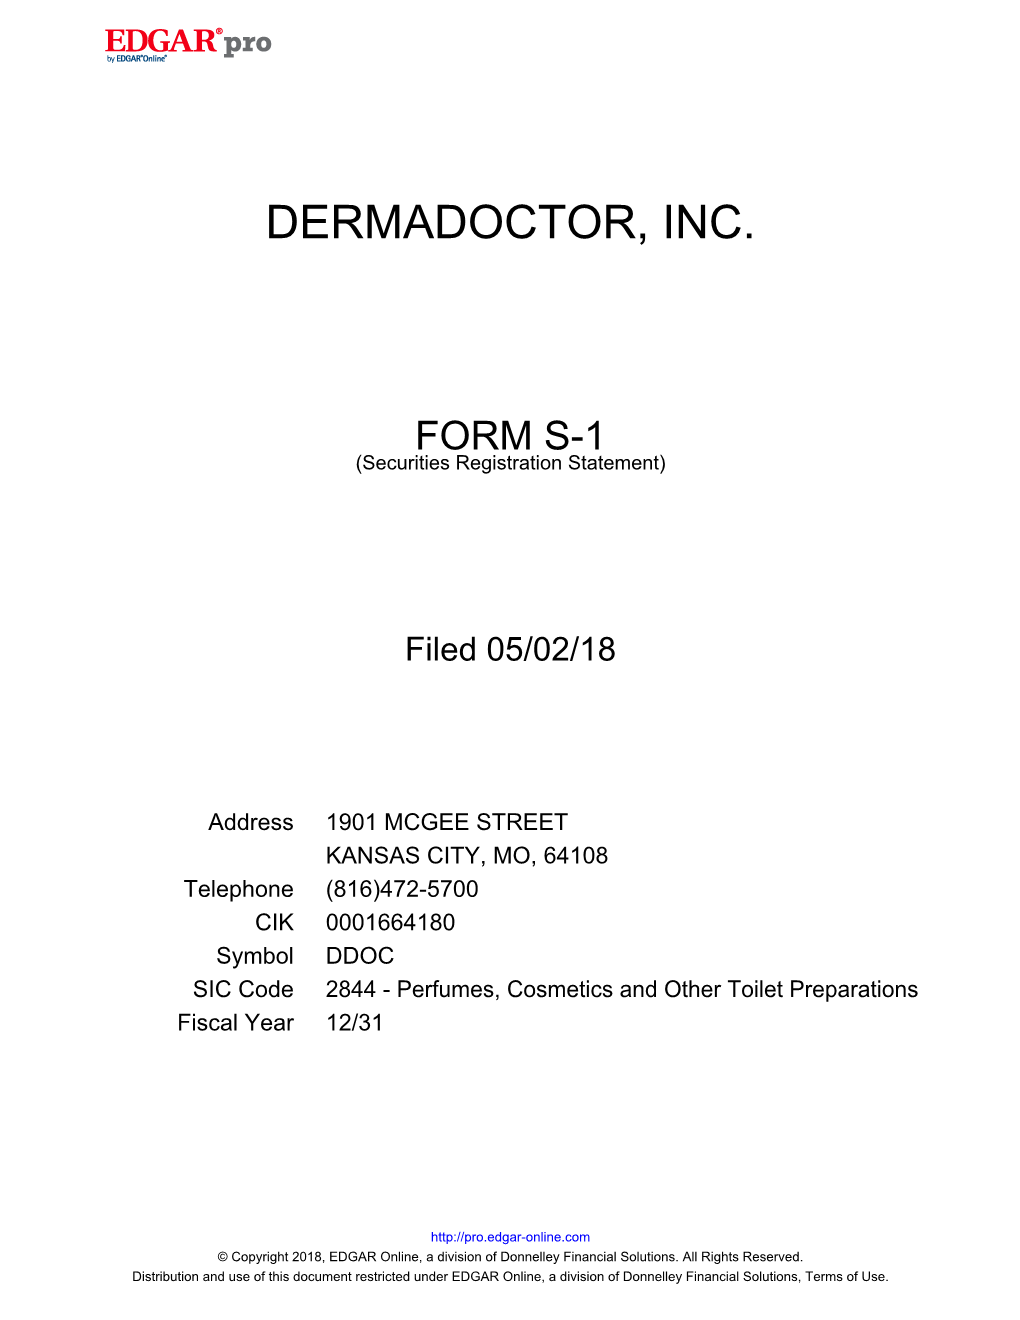 Dermadoctor, Inc